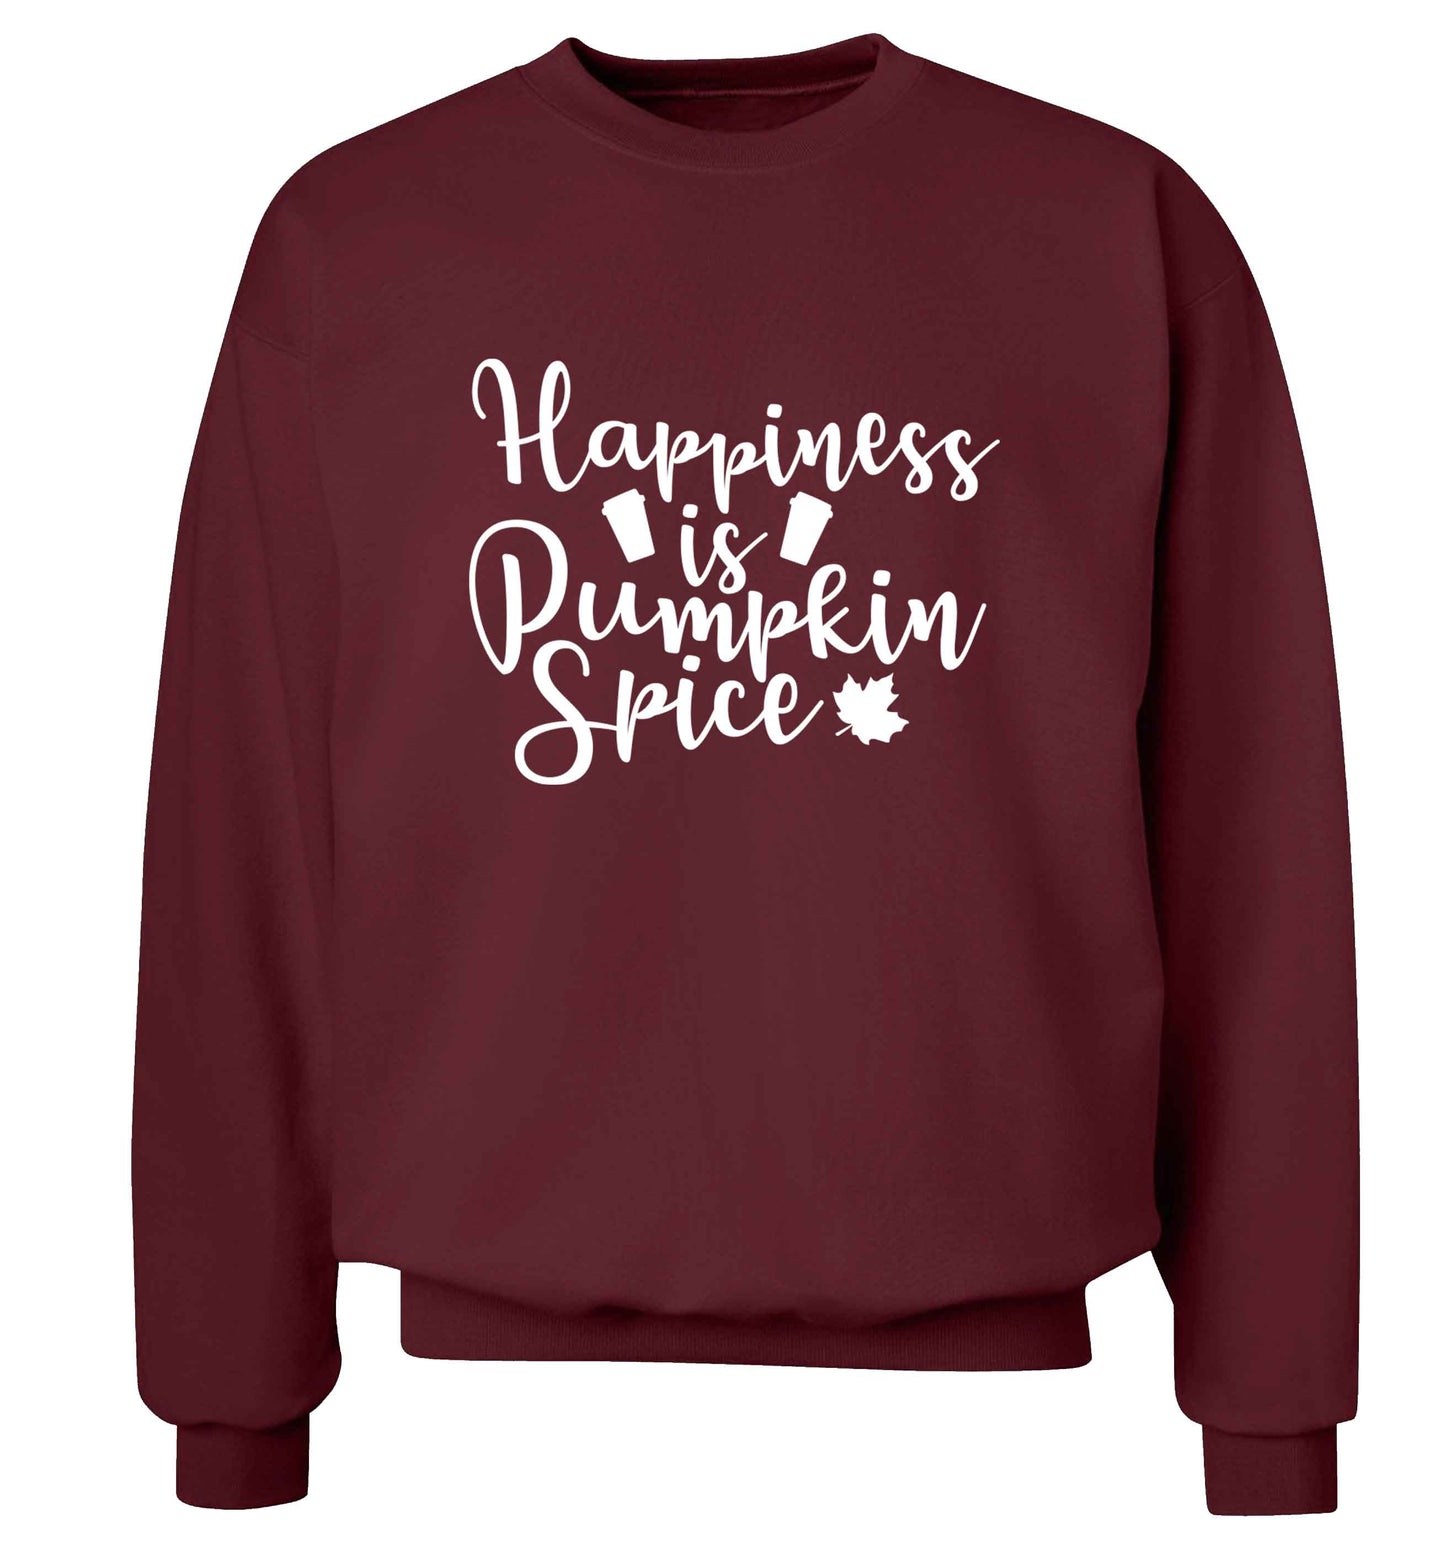 Happiness Pumpkin Spice adult's unisex maroon sweater 2XL